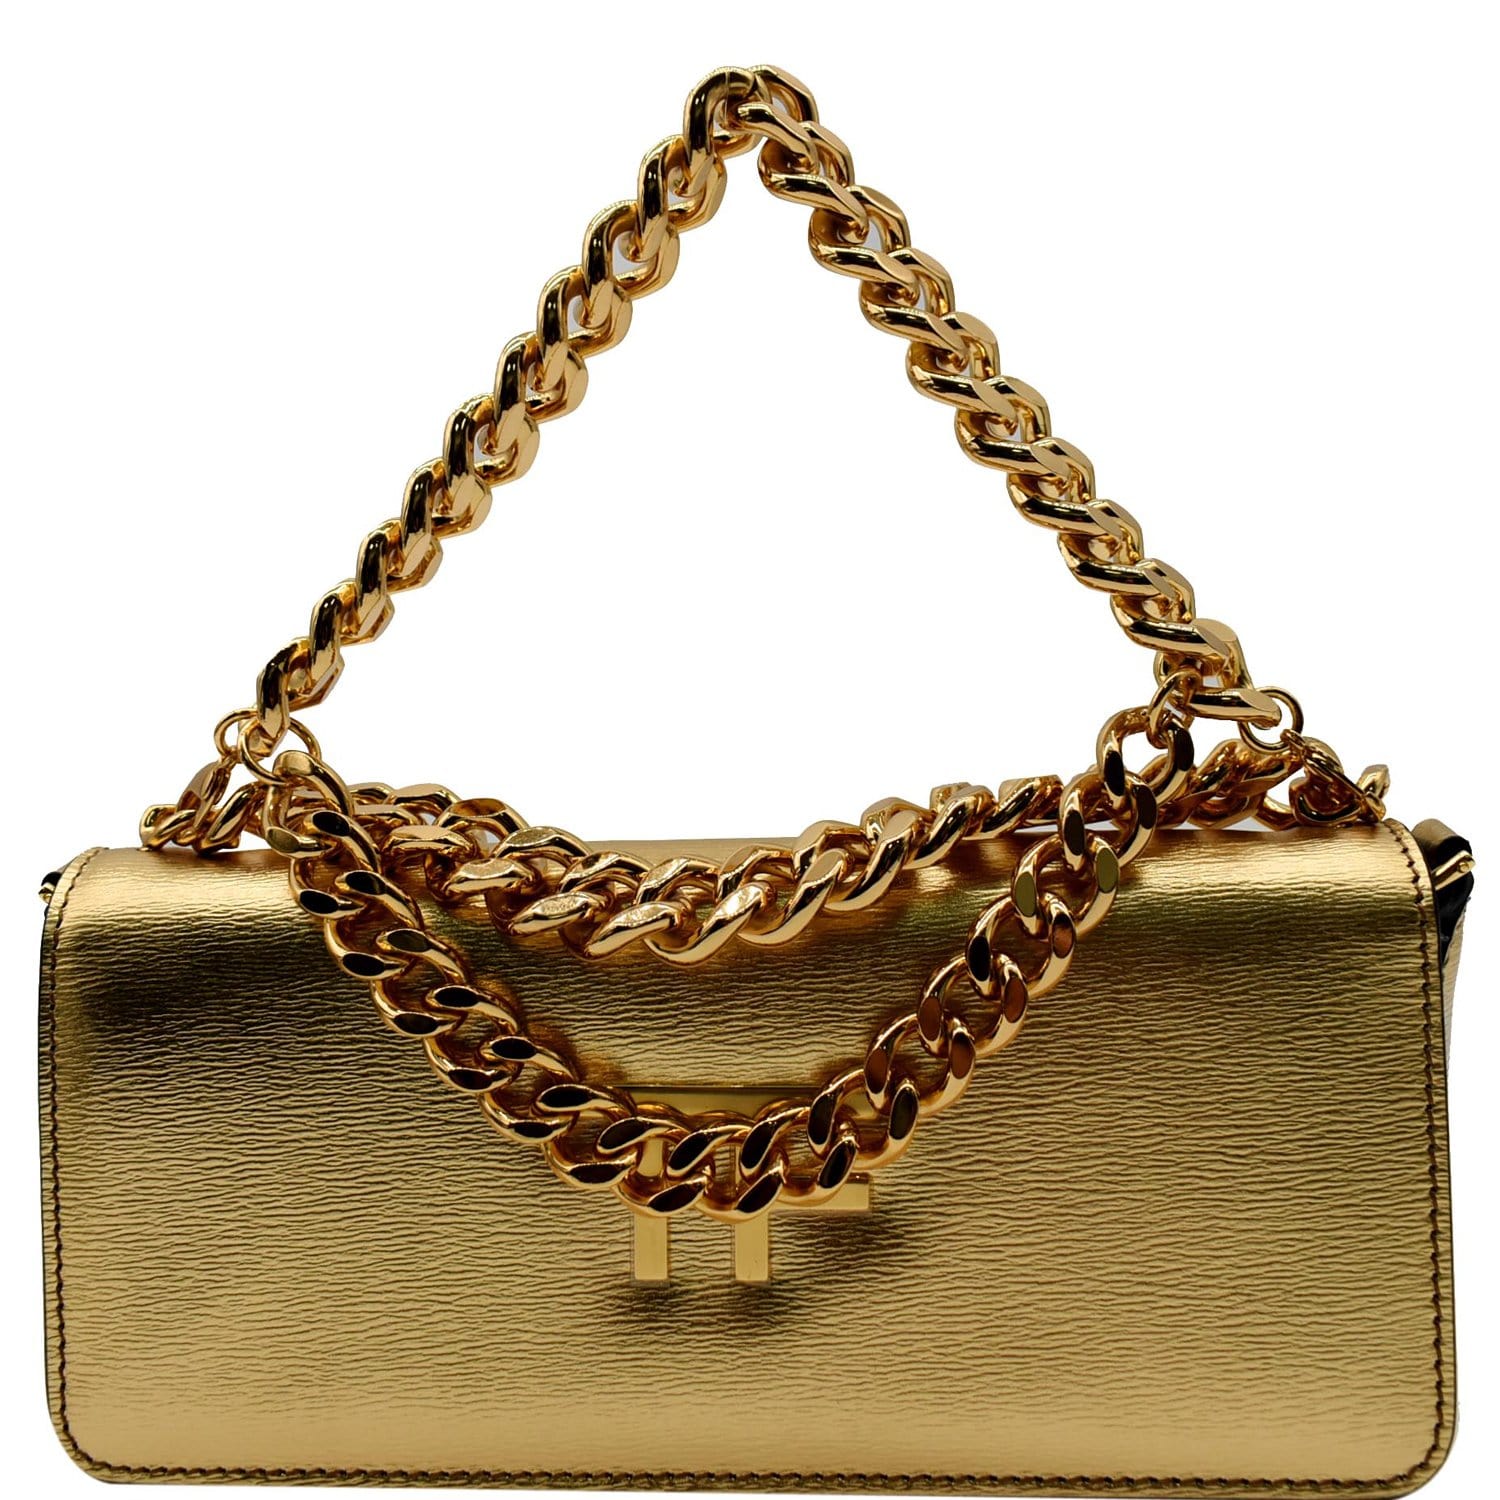 Beautiful Gold Chain Bag - All Handbags